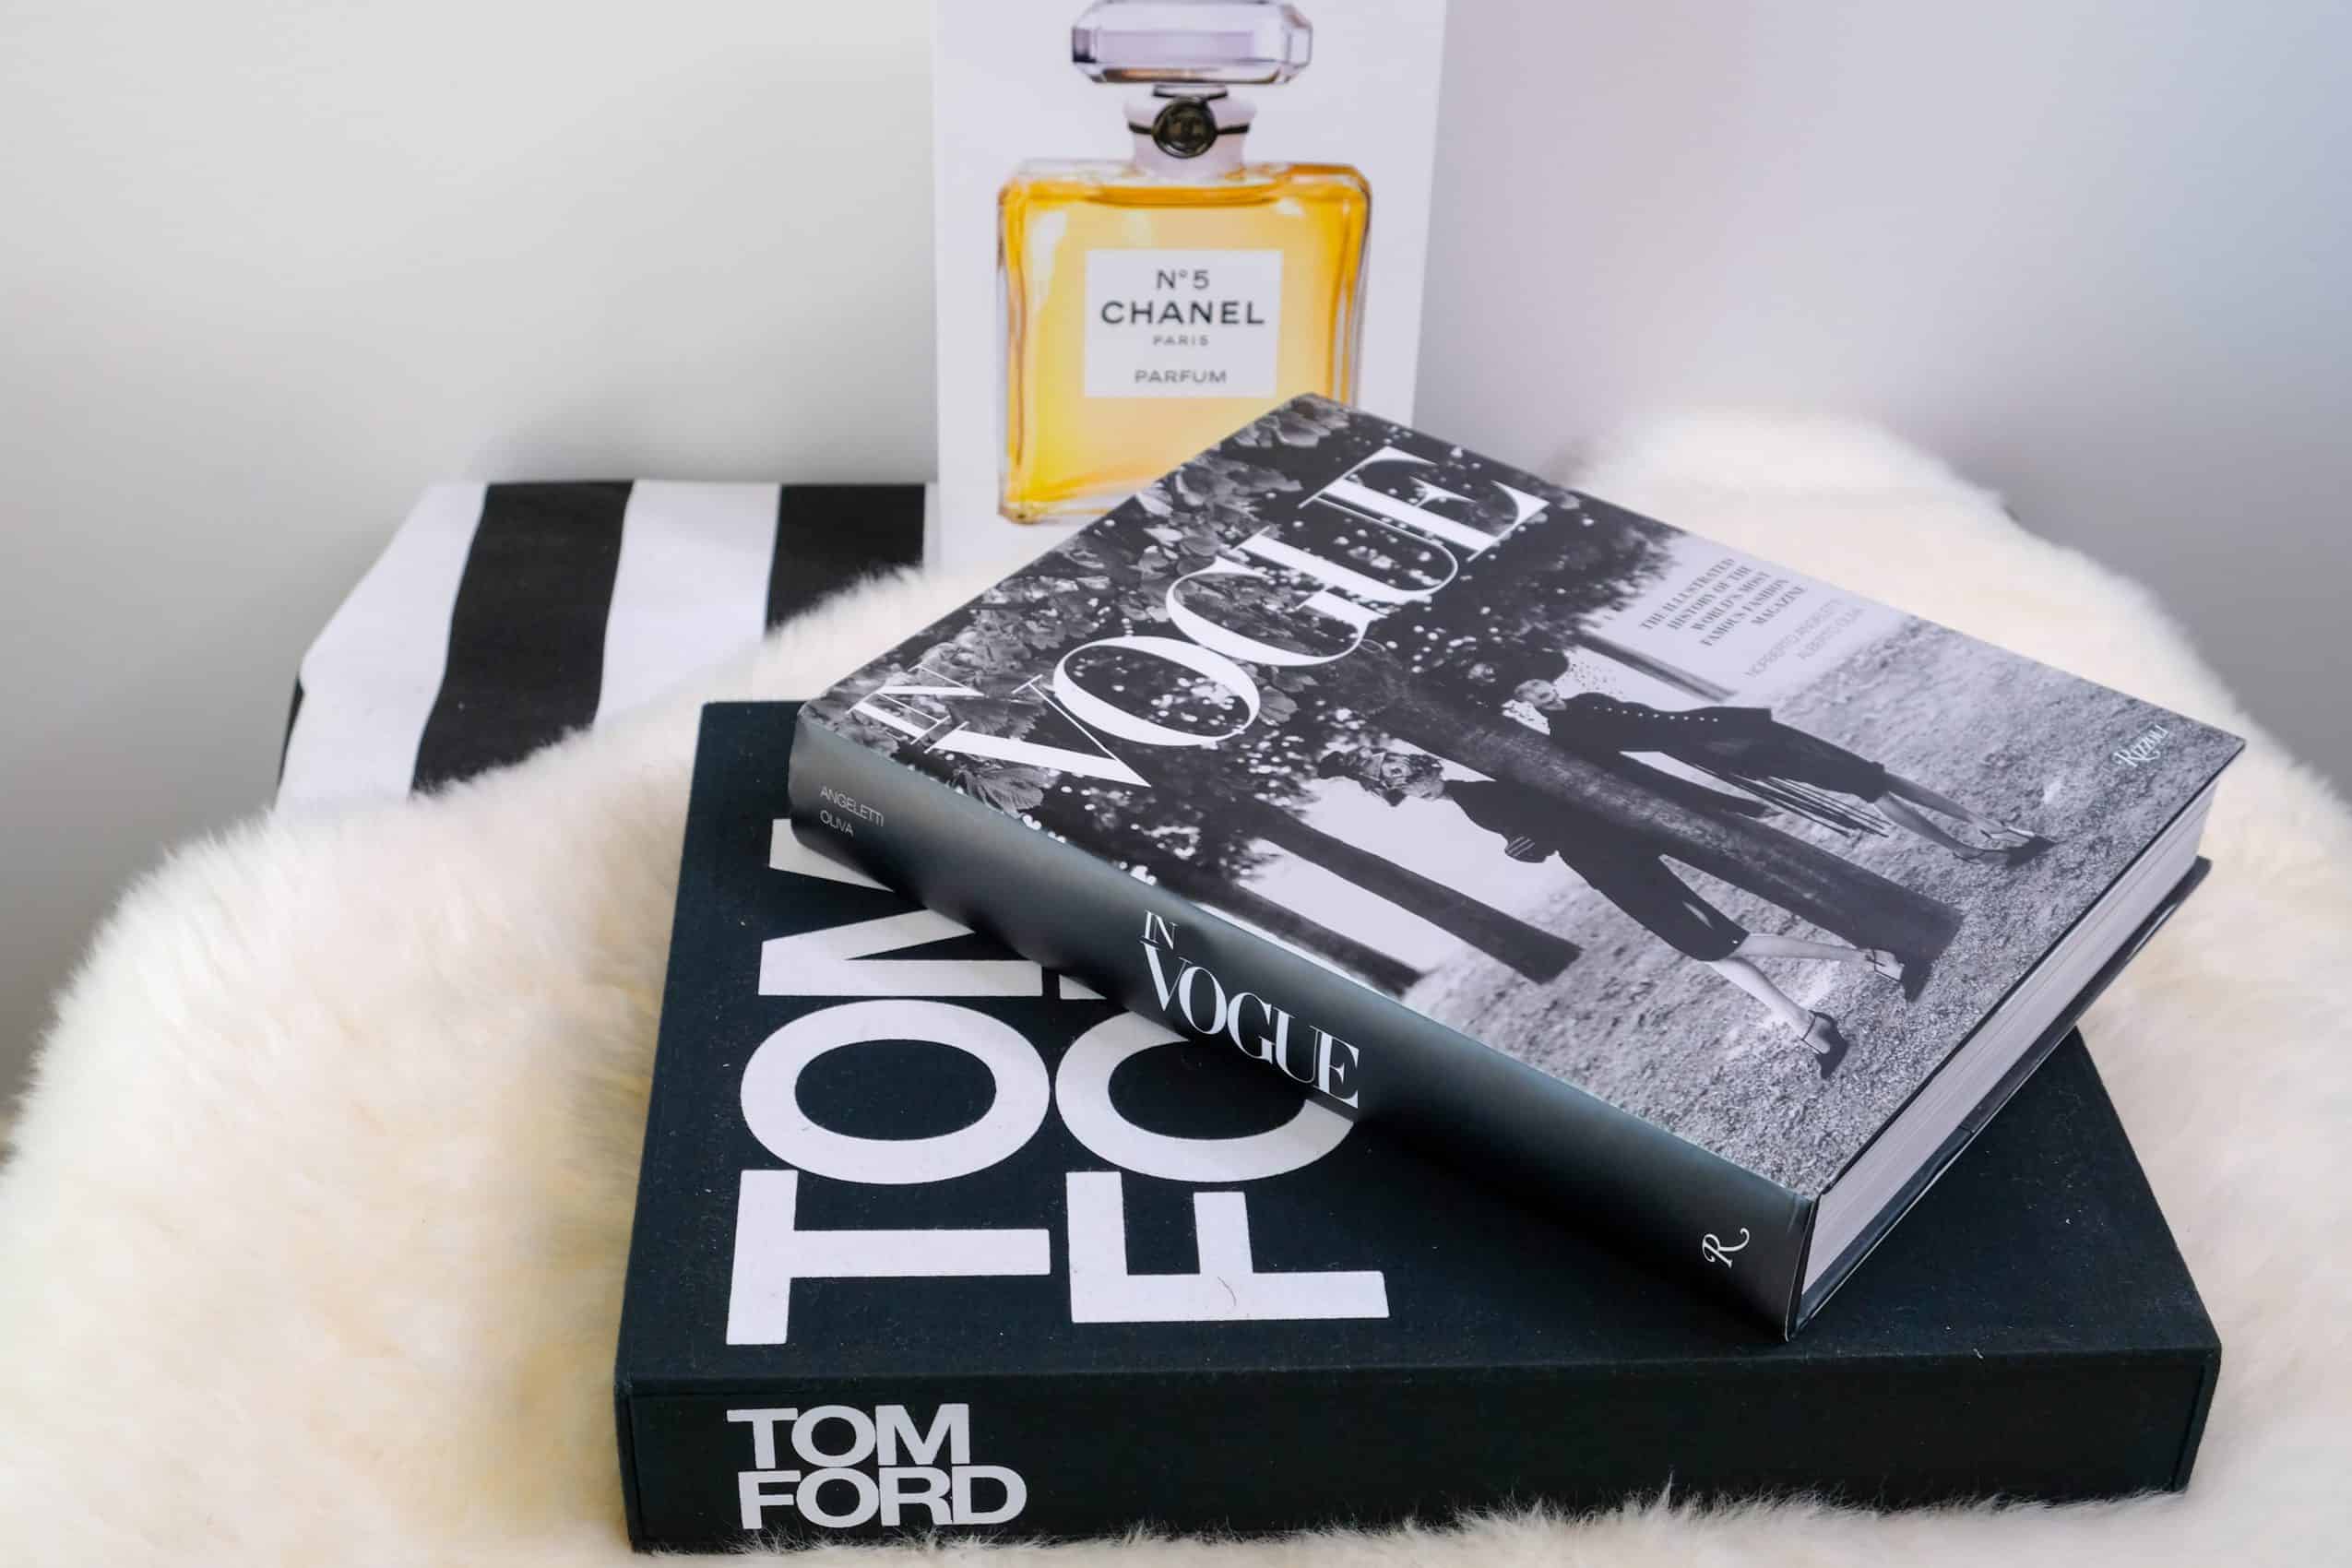 Том форд книга. Книга Tom Ford. The Luxury collection книга. Tom Ford книга черная. Том Форд 002 книга.